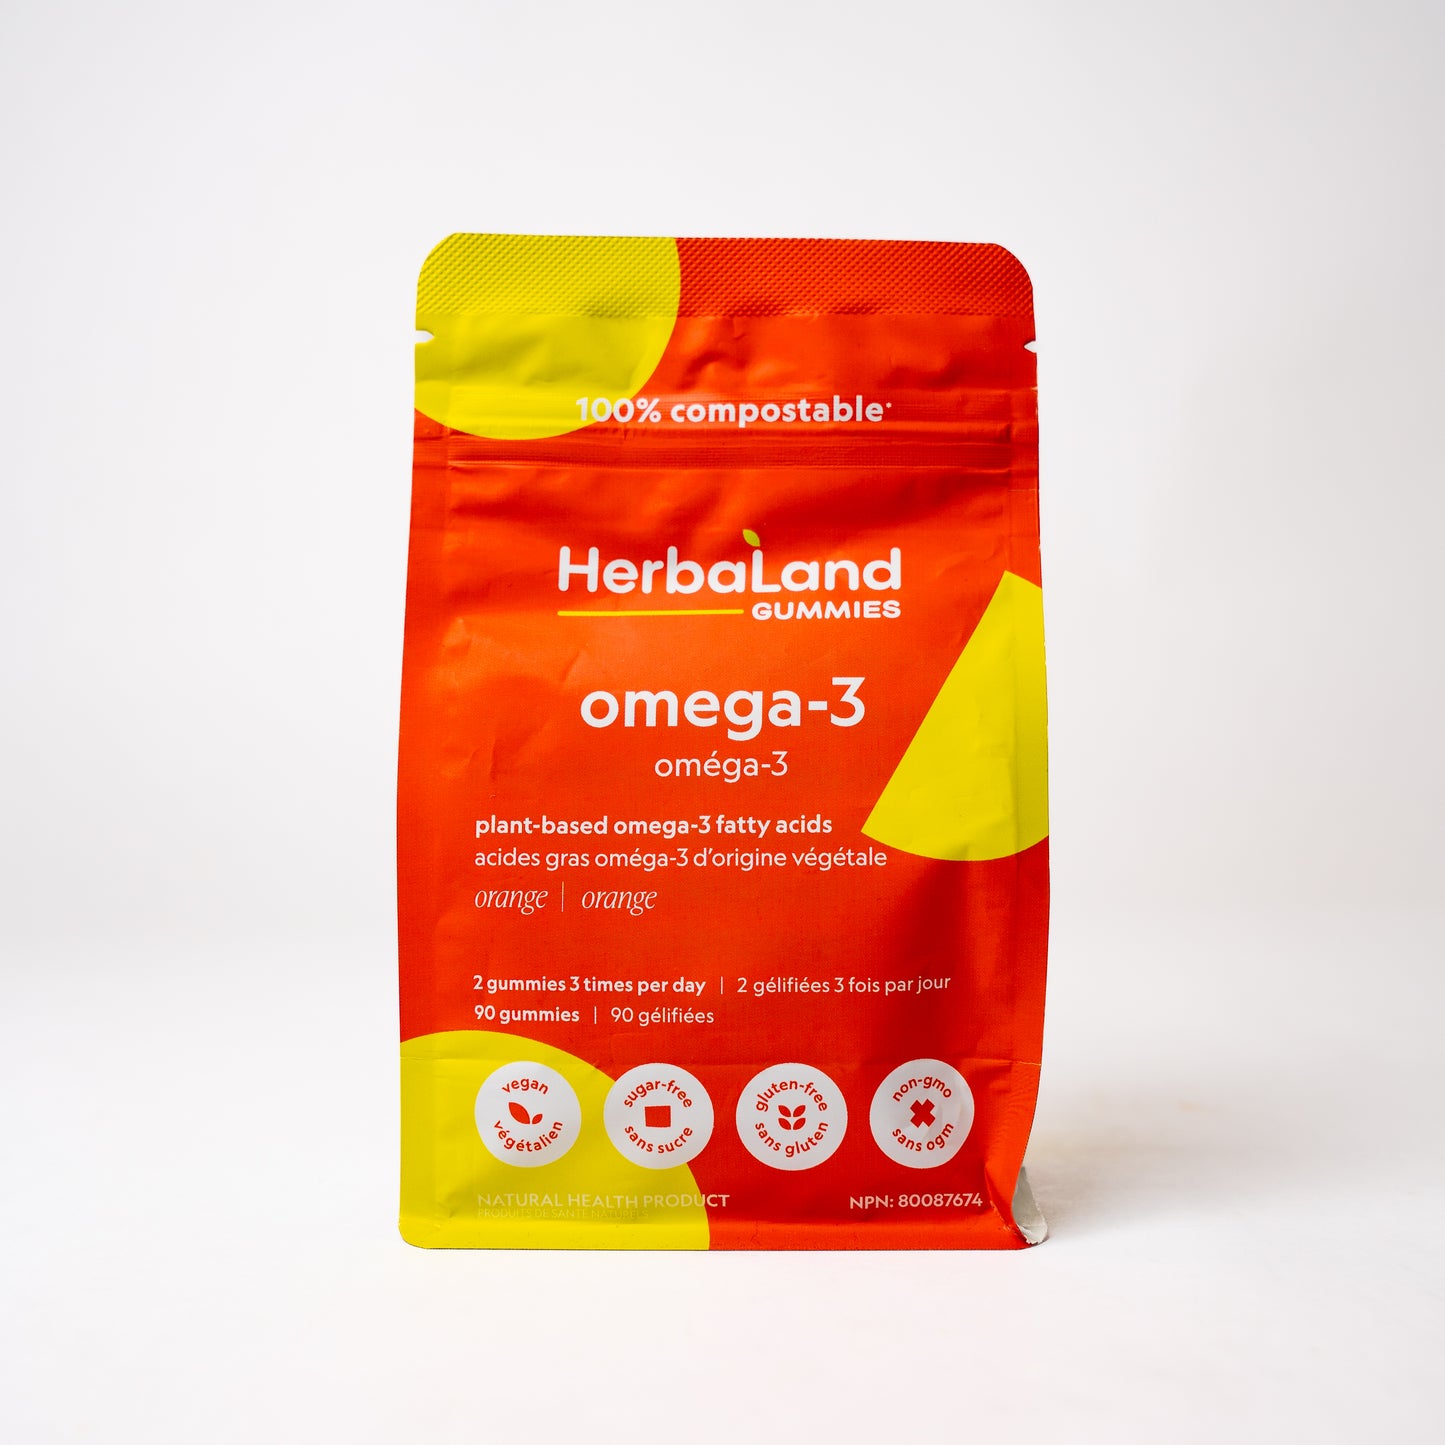 HerbaLand Omega-3